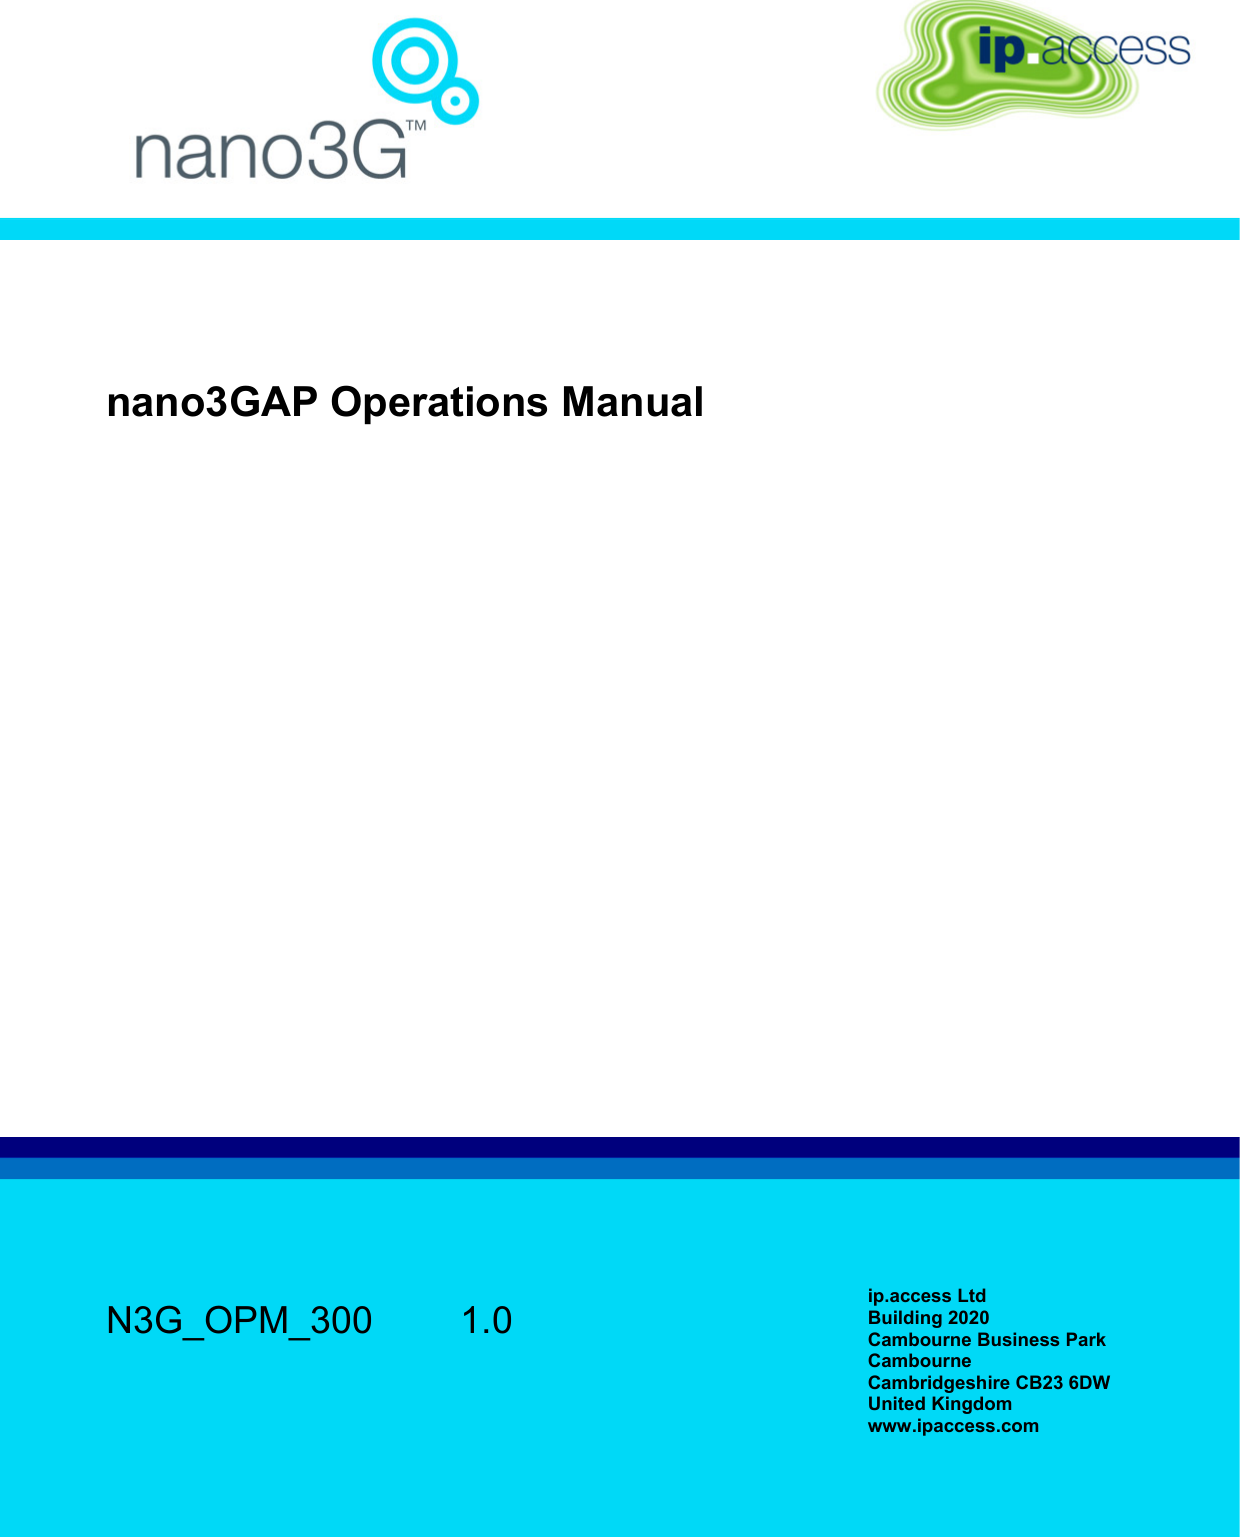    nano3GAP Operations Manual   N3G_OPM_300   1.0  ip.access Ltd Building 2020 Cambourne Business Park Cambourne Cambridgeshire CB23 6DW United Kingdom www.ipaccess.com  